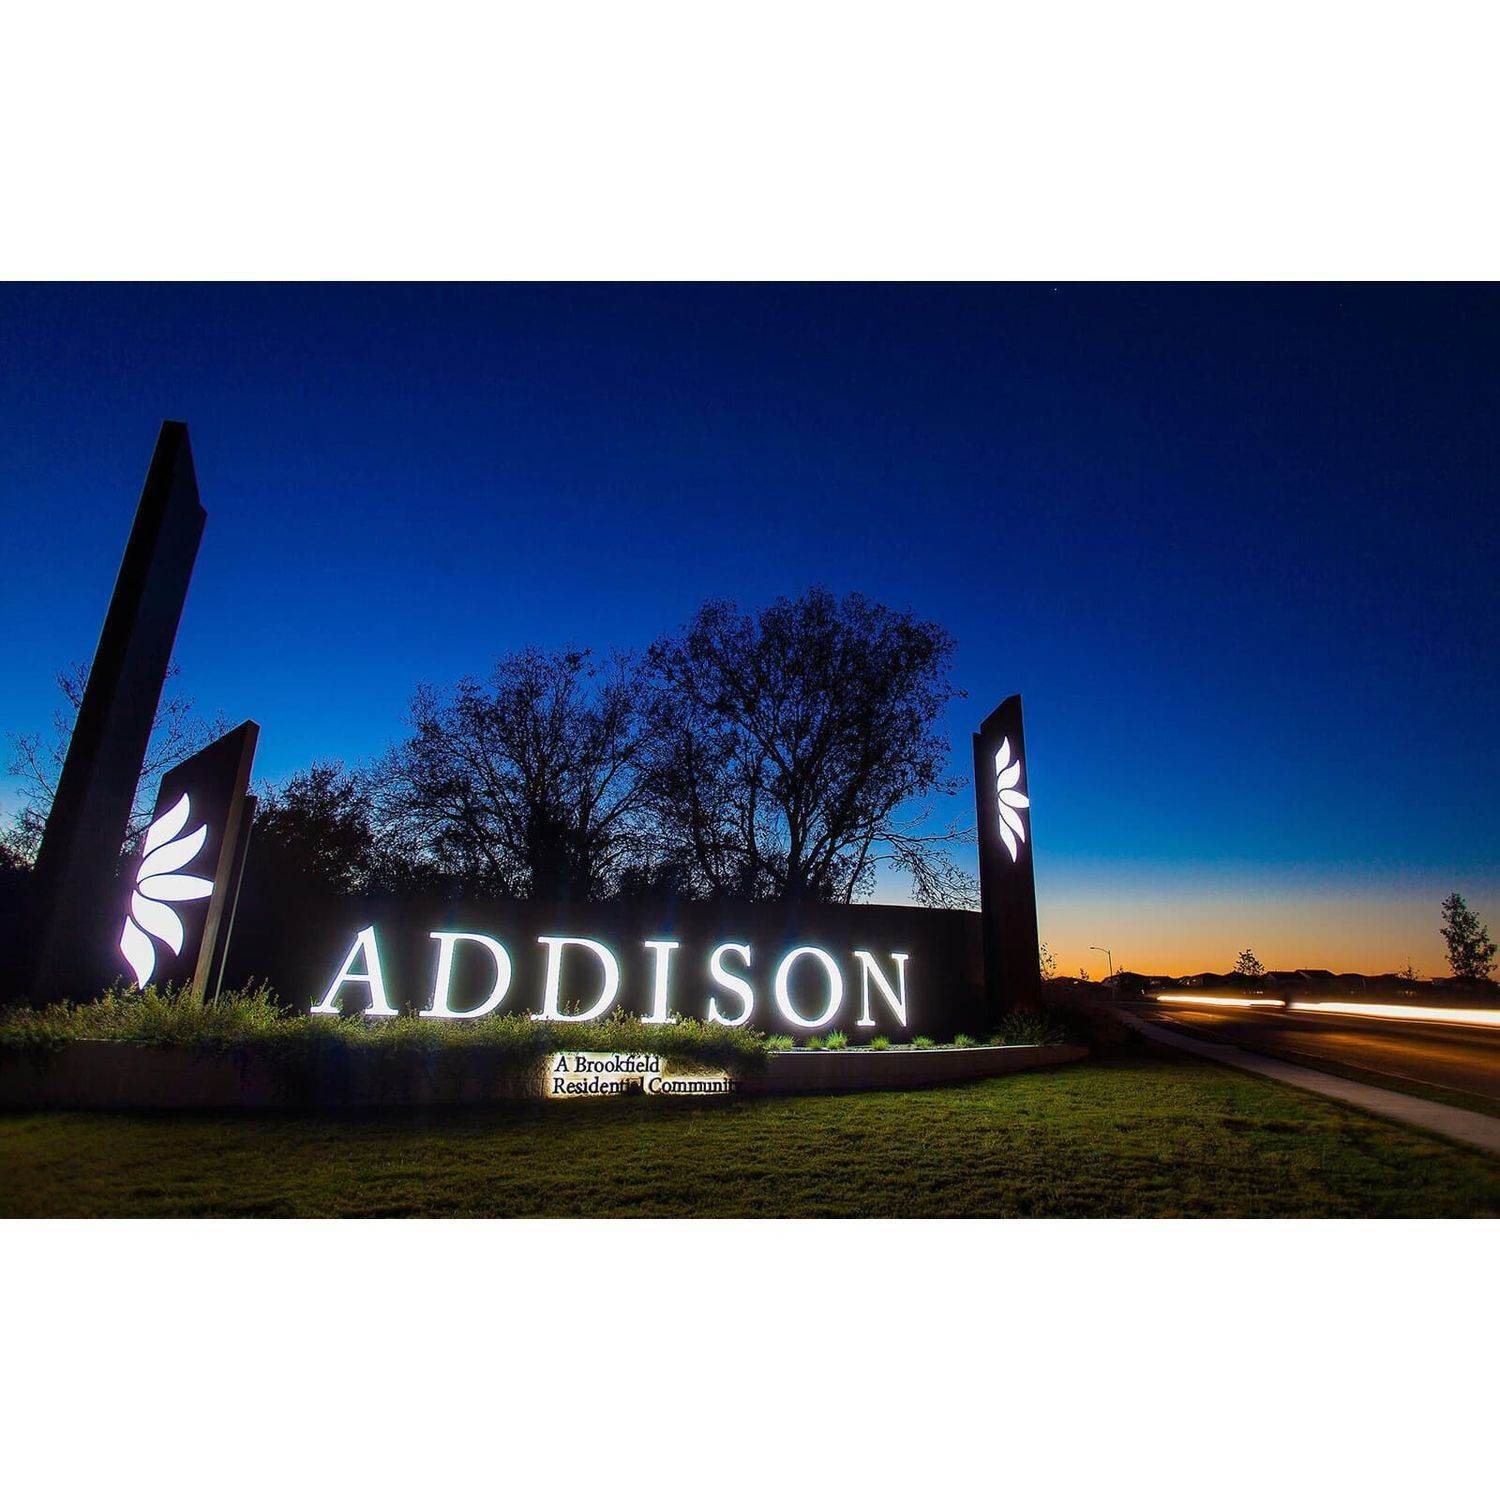 7. Addison South Neighborhood at Addison building at 8200 Greyhawk Cv., Southeast Austin, Austin, TX 78744